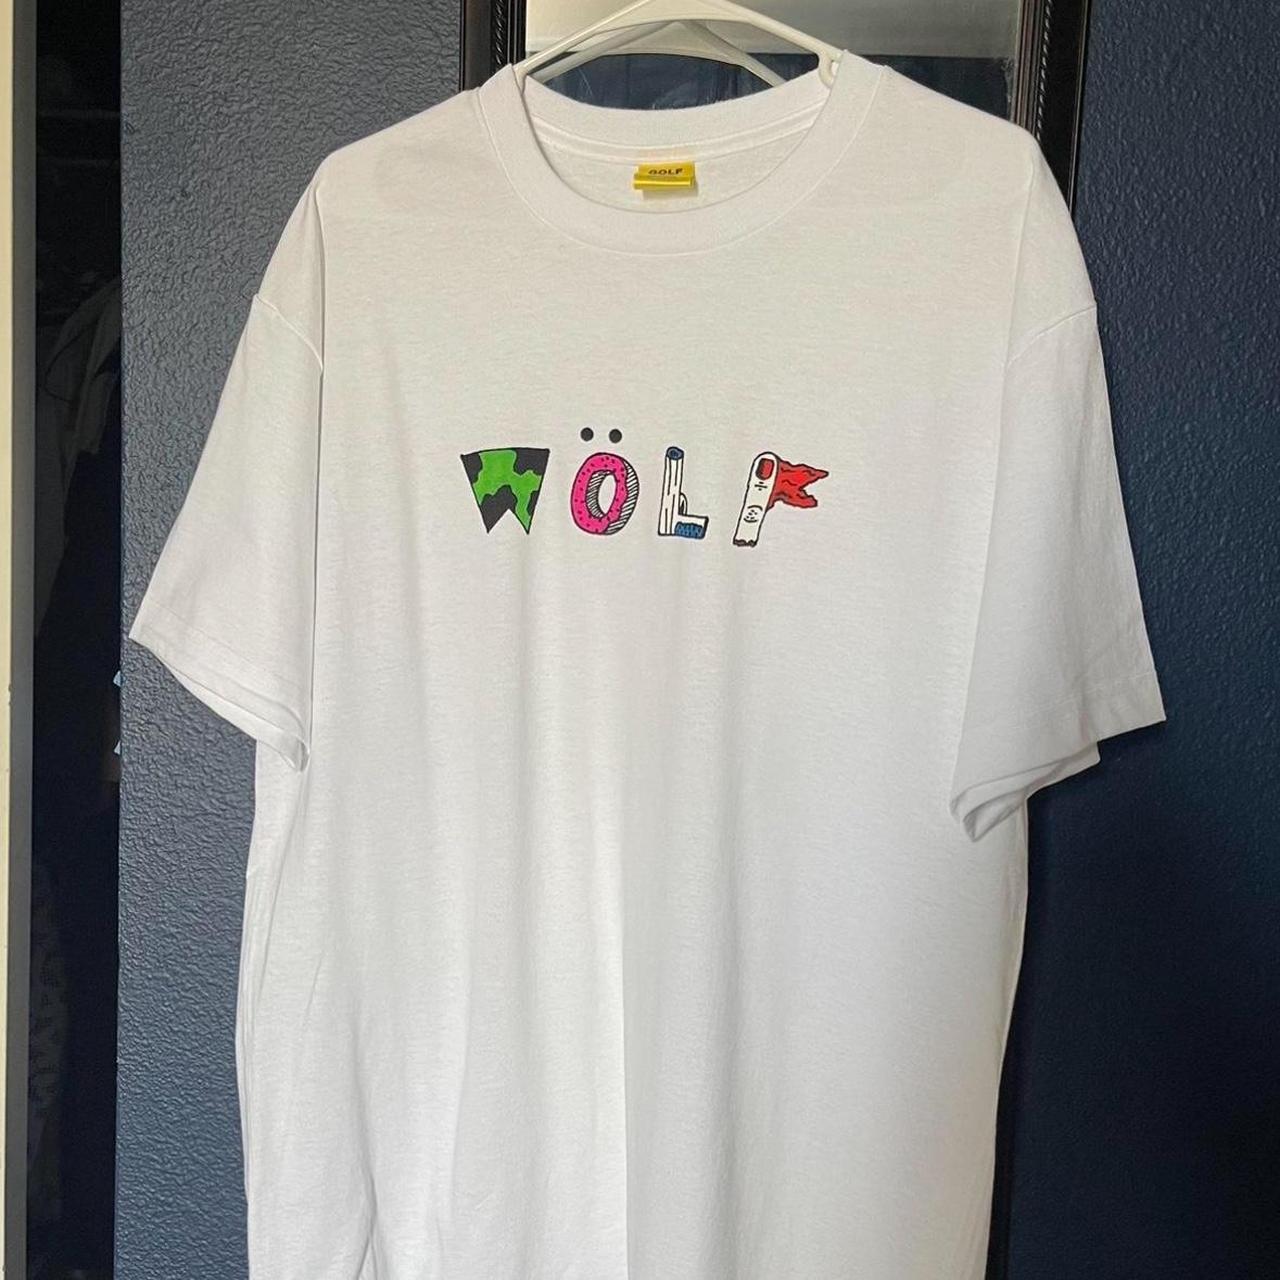 WOLF 10 year anniversary bmx tee Brand new Might... - Depop